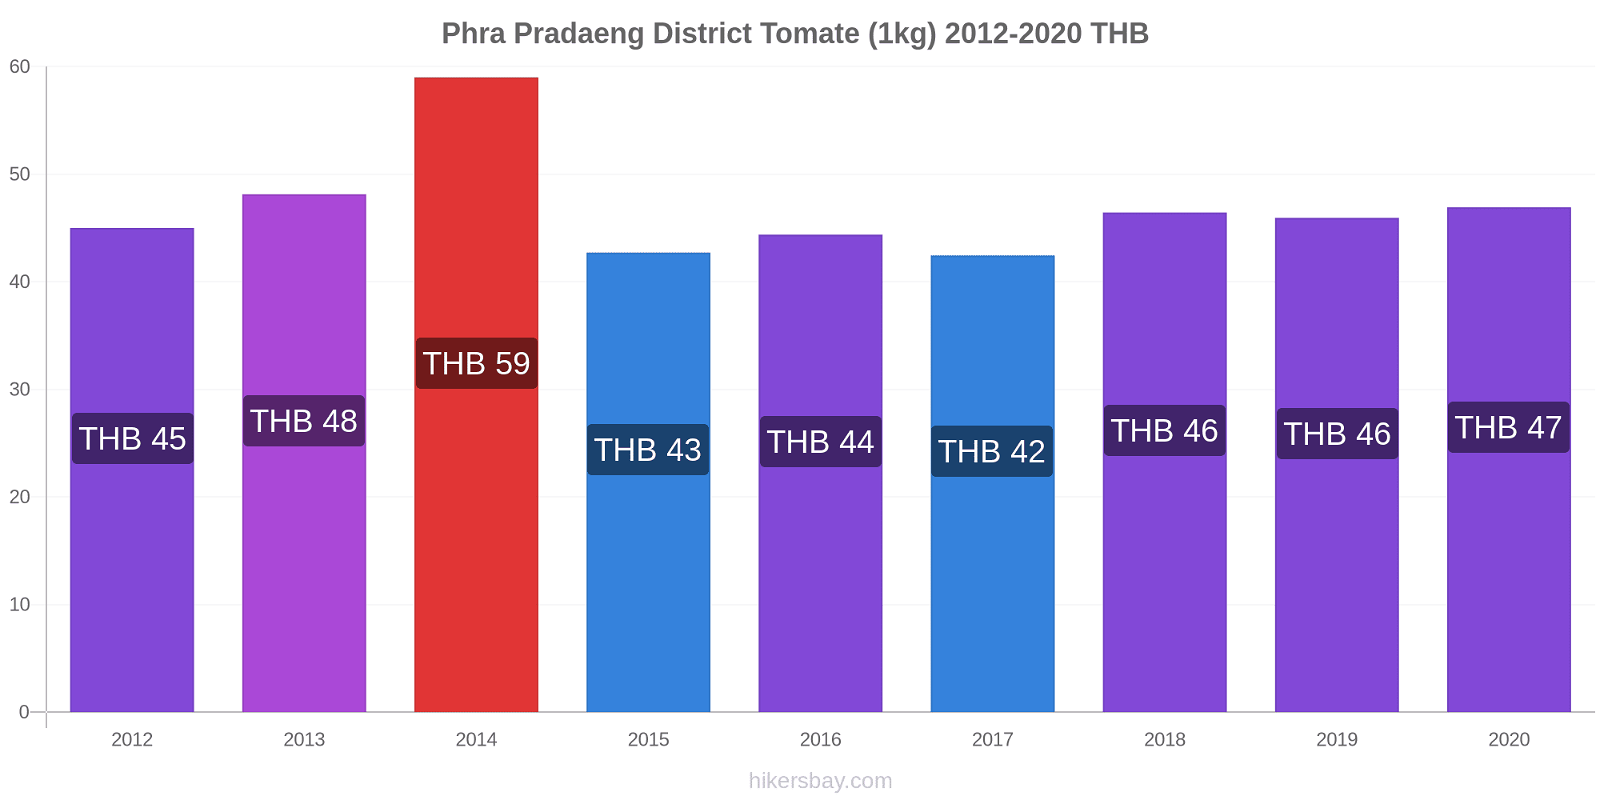 Phra Pradaeng District cambios de precios Tomate (1kg) hikersbay.com